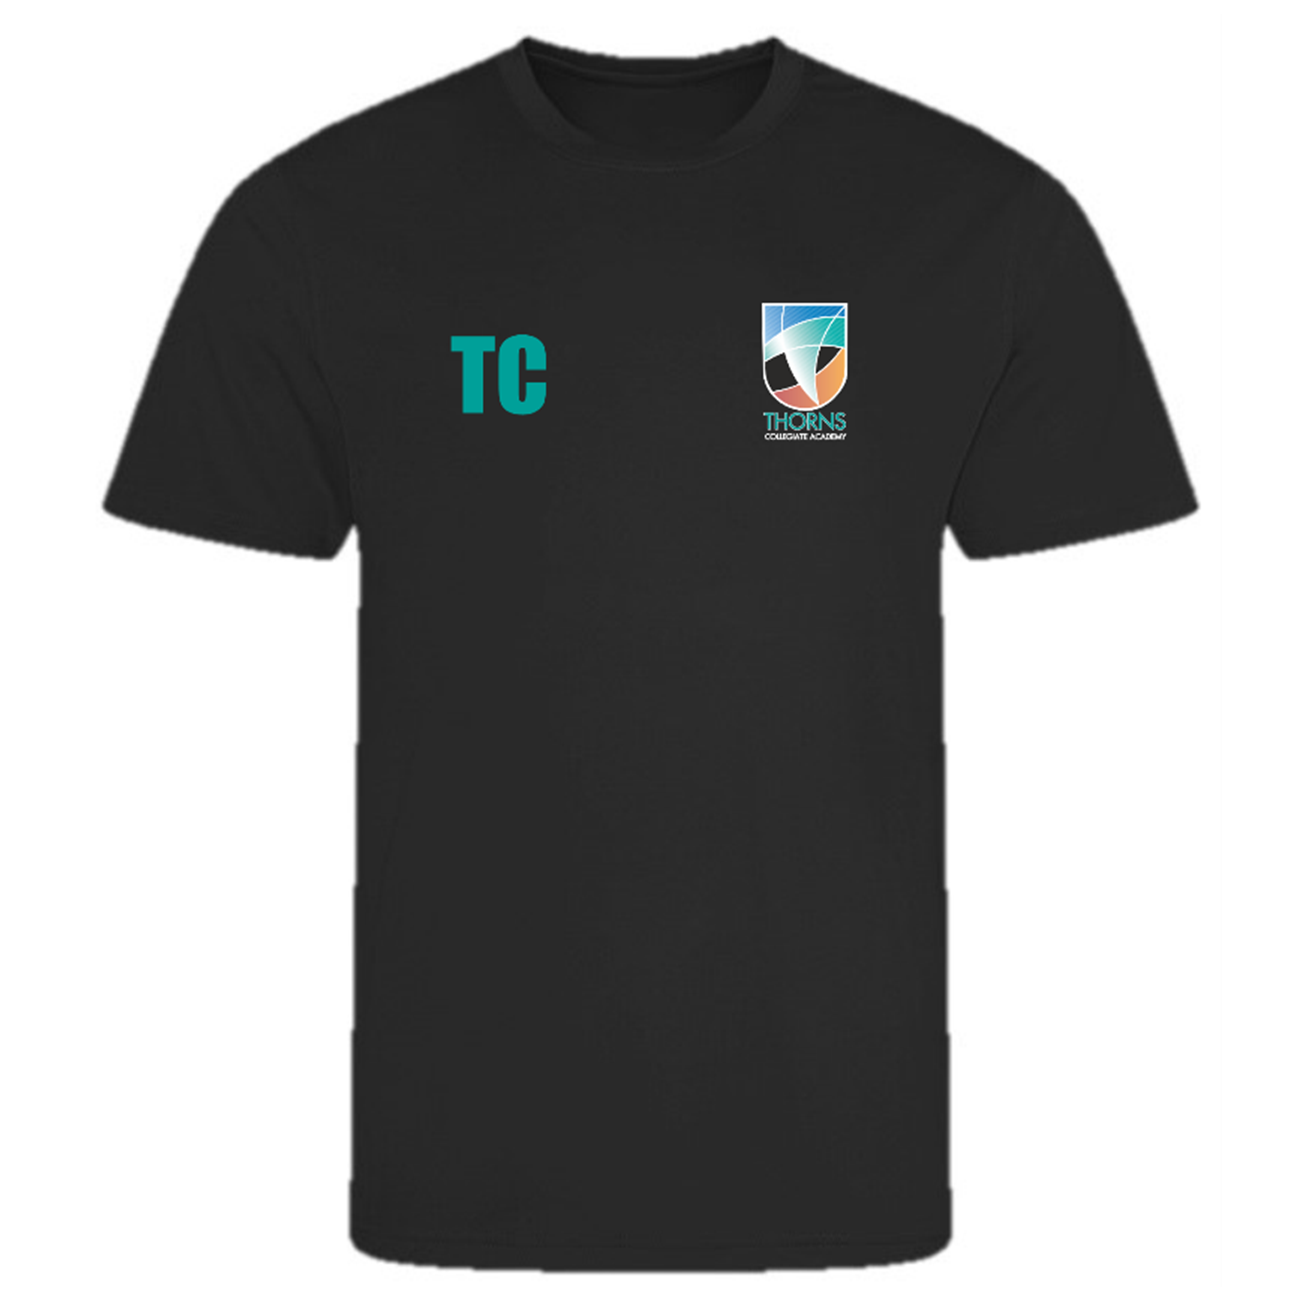 Thorns P.E. T-Shirt [TCA]